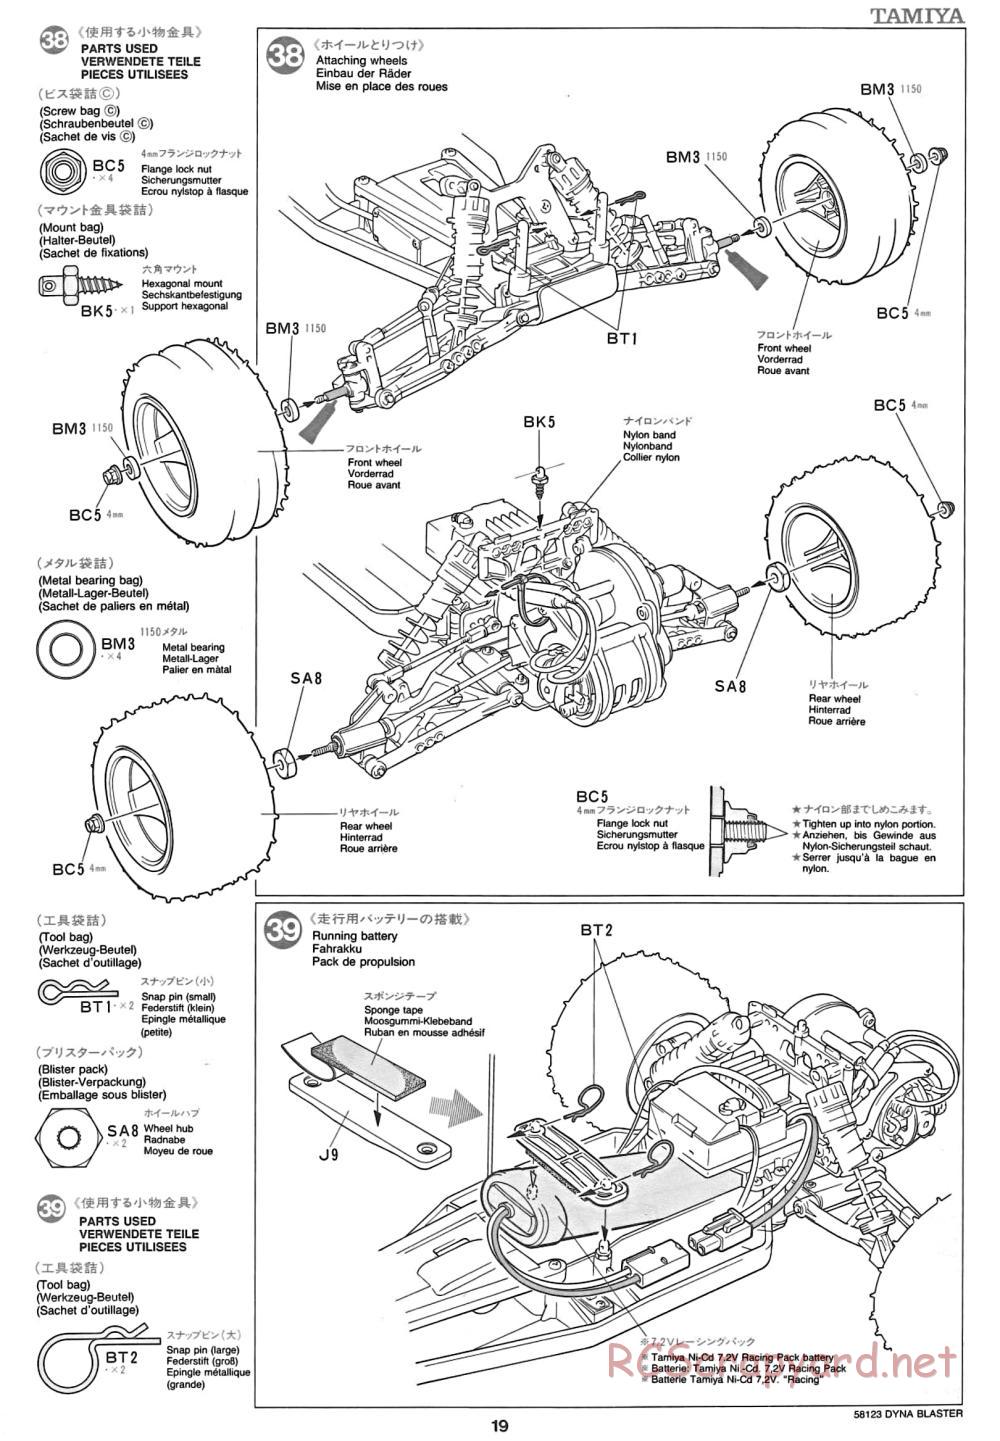 Tamiya - Dyna Blaster Chassis - Manual - Page 19